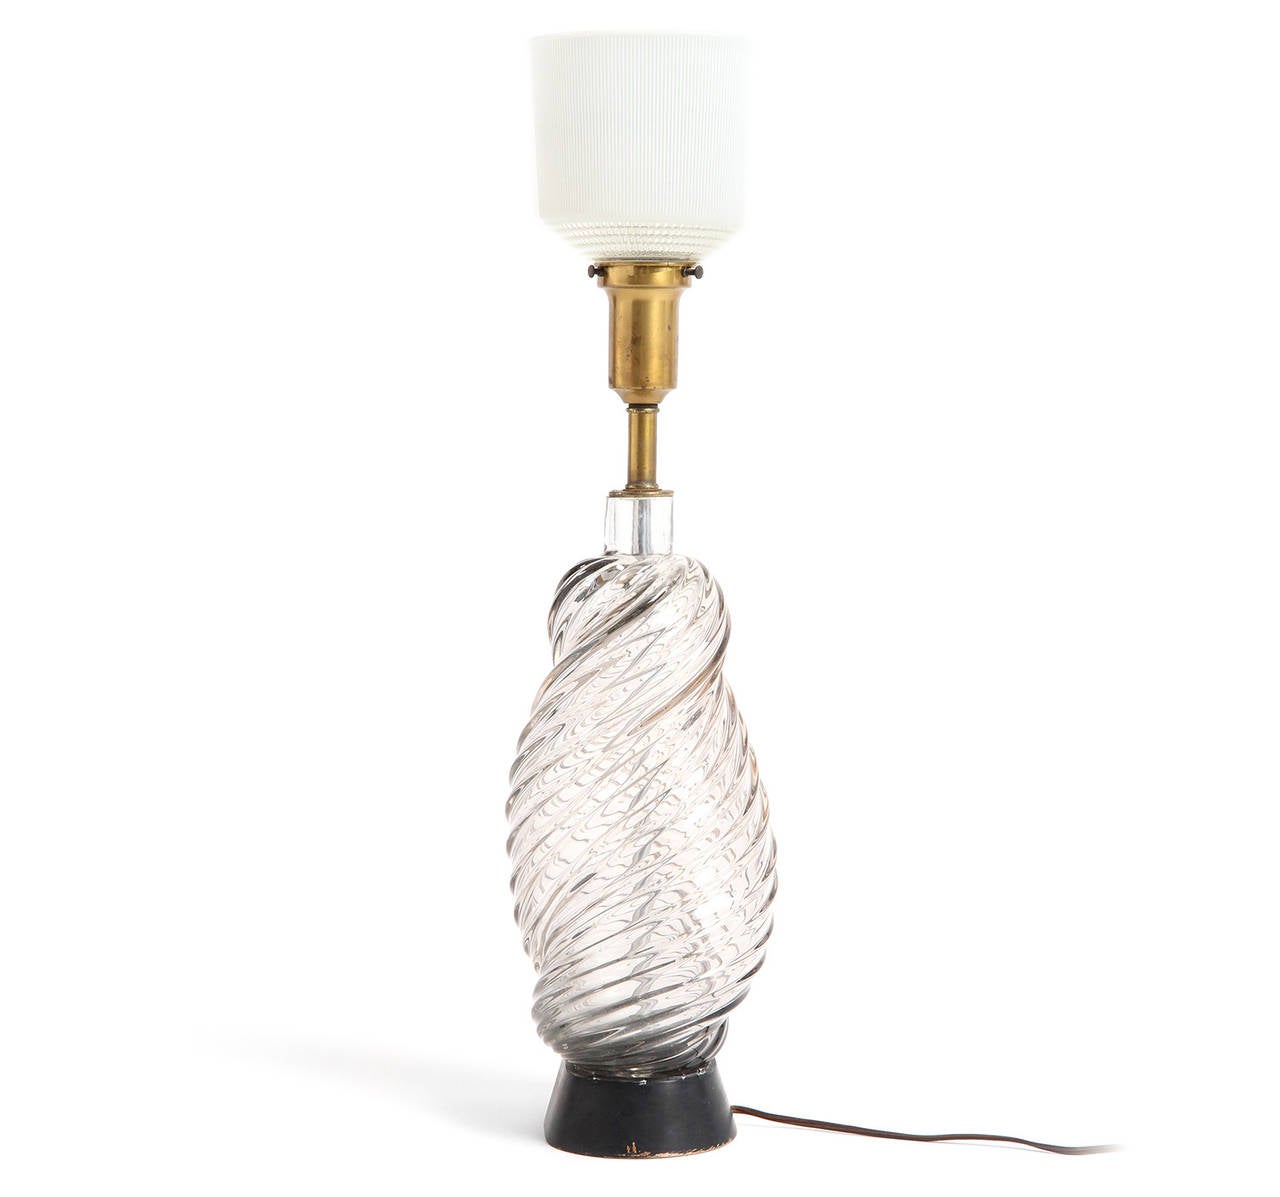 American Spiraling Striated Glass Desk Lamp